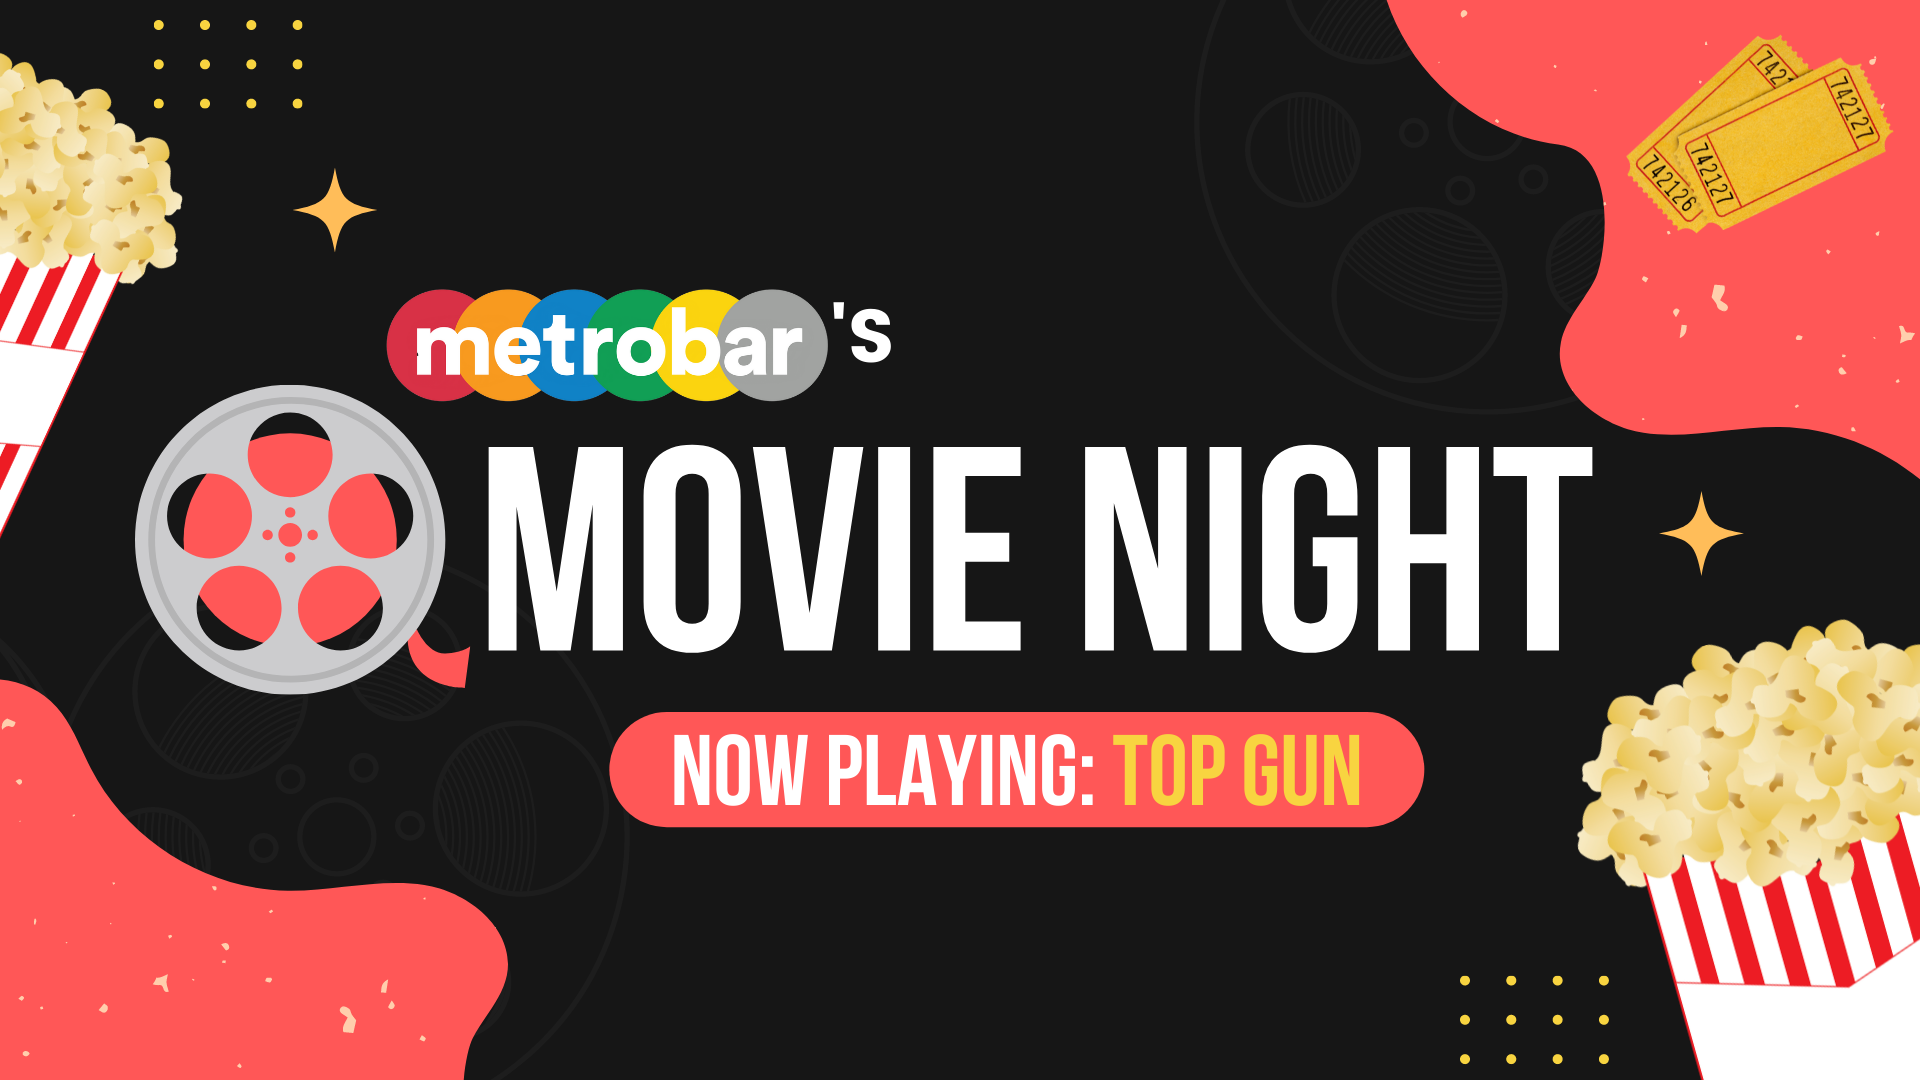 Movie Night @ metrobar